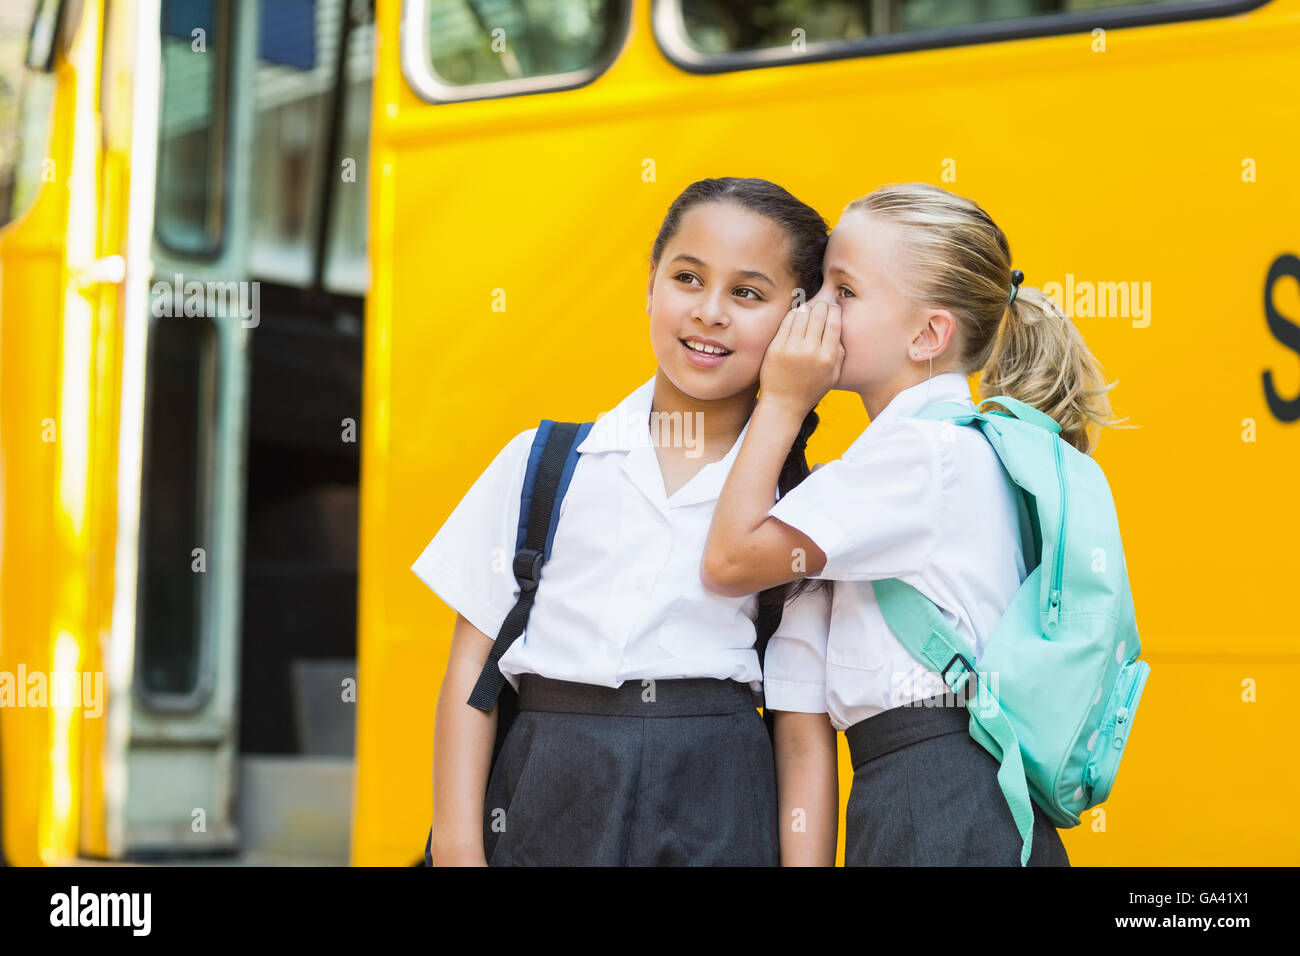 Smiling schoolgirl whispering in her friend's ear Stock Photo